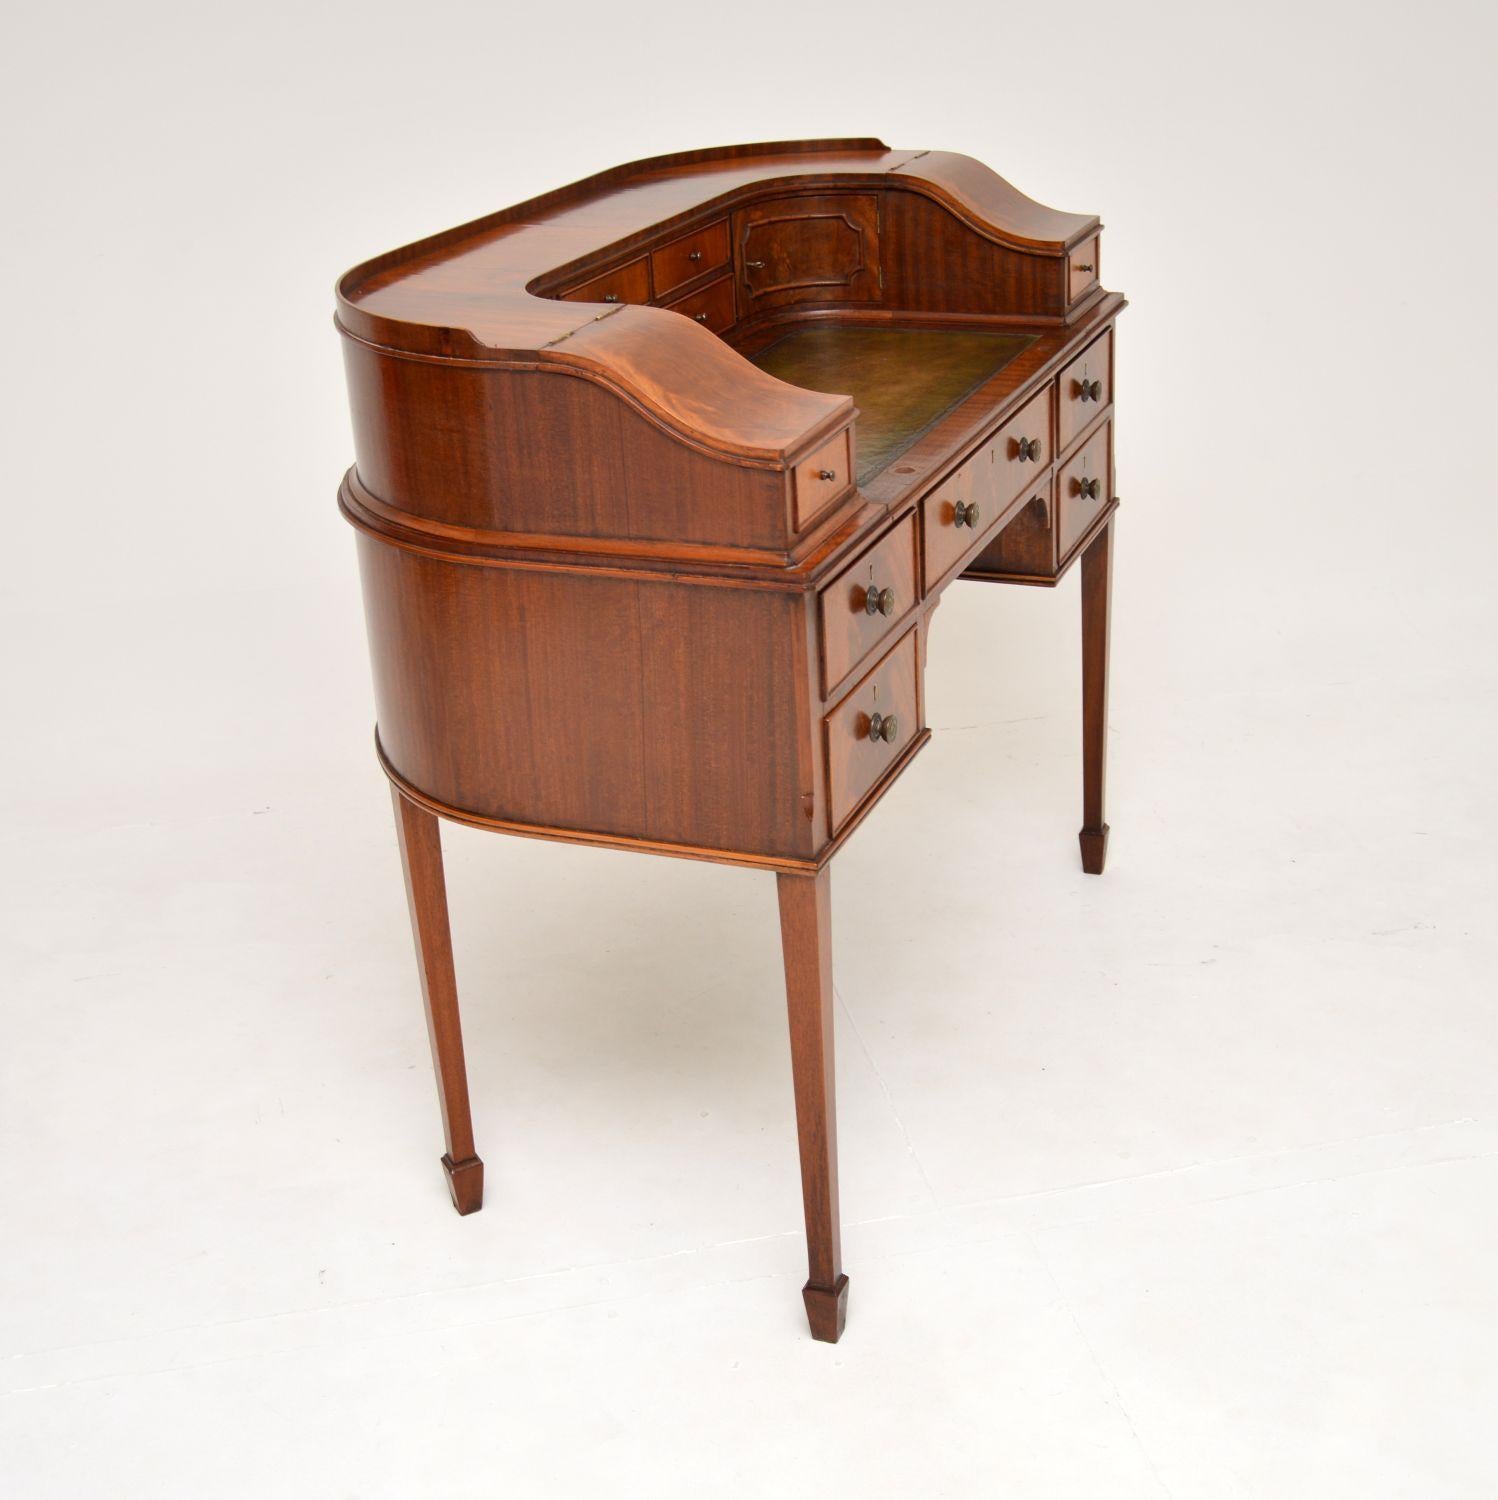 Sheraton Antique Leather Top Carlton House Desk